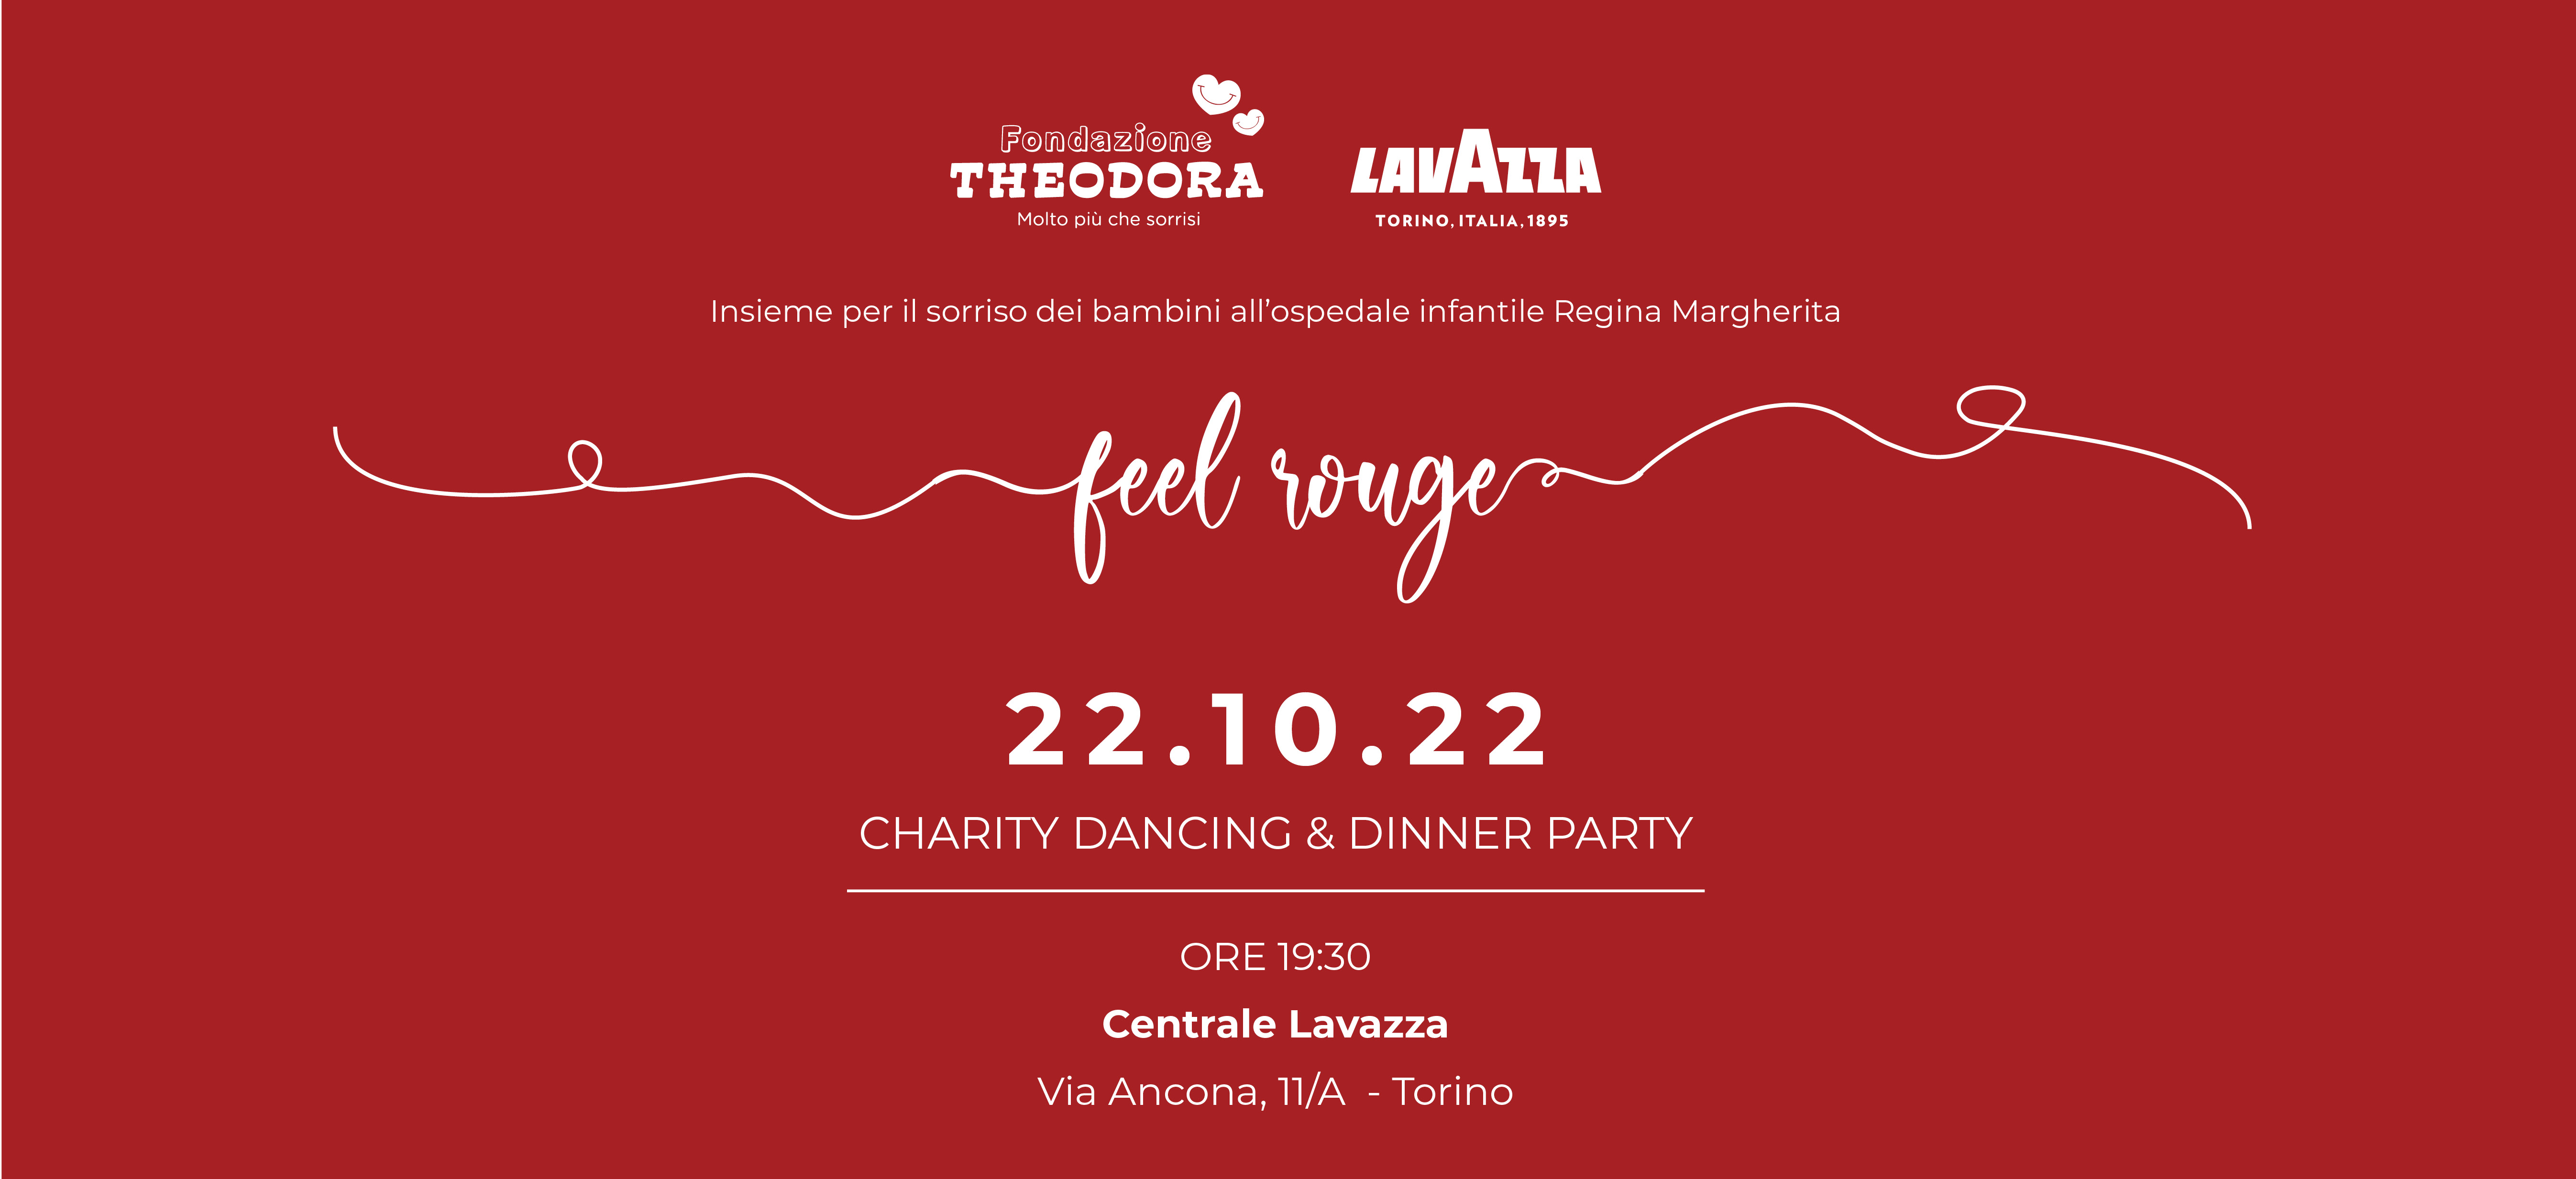 Charity Dancing e Dinner Party Theodora -Fondazione Theodora Onlus